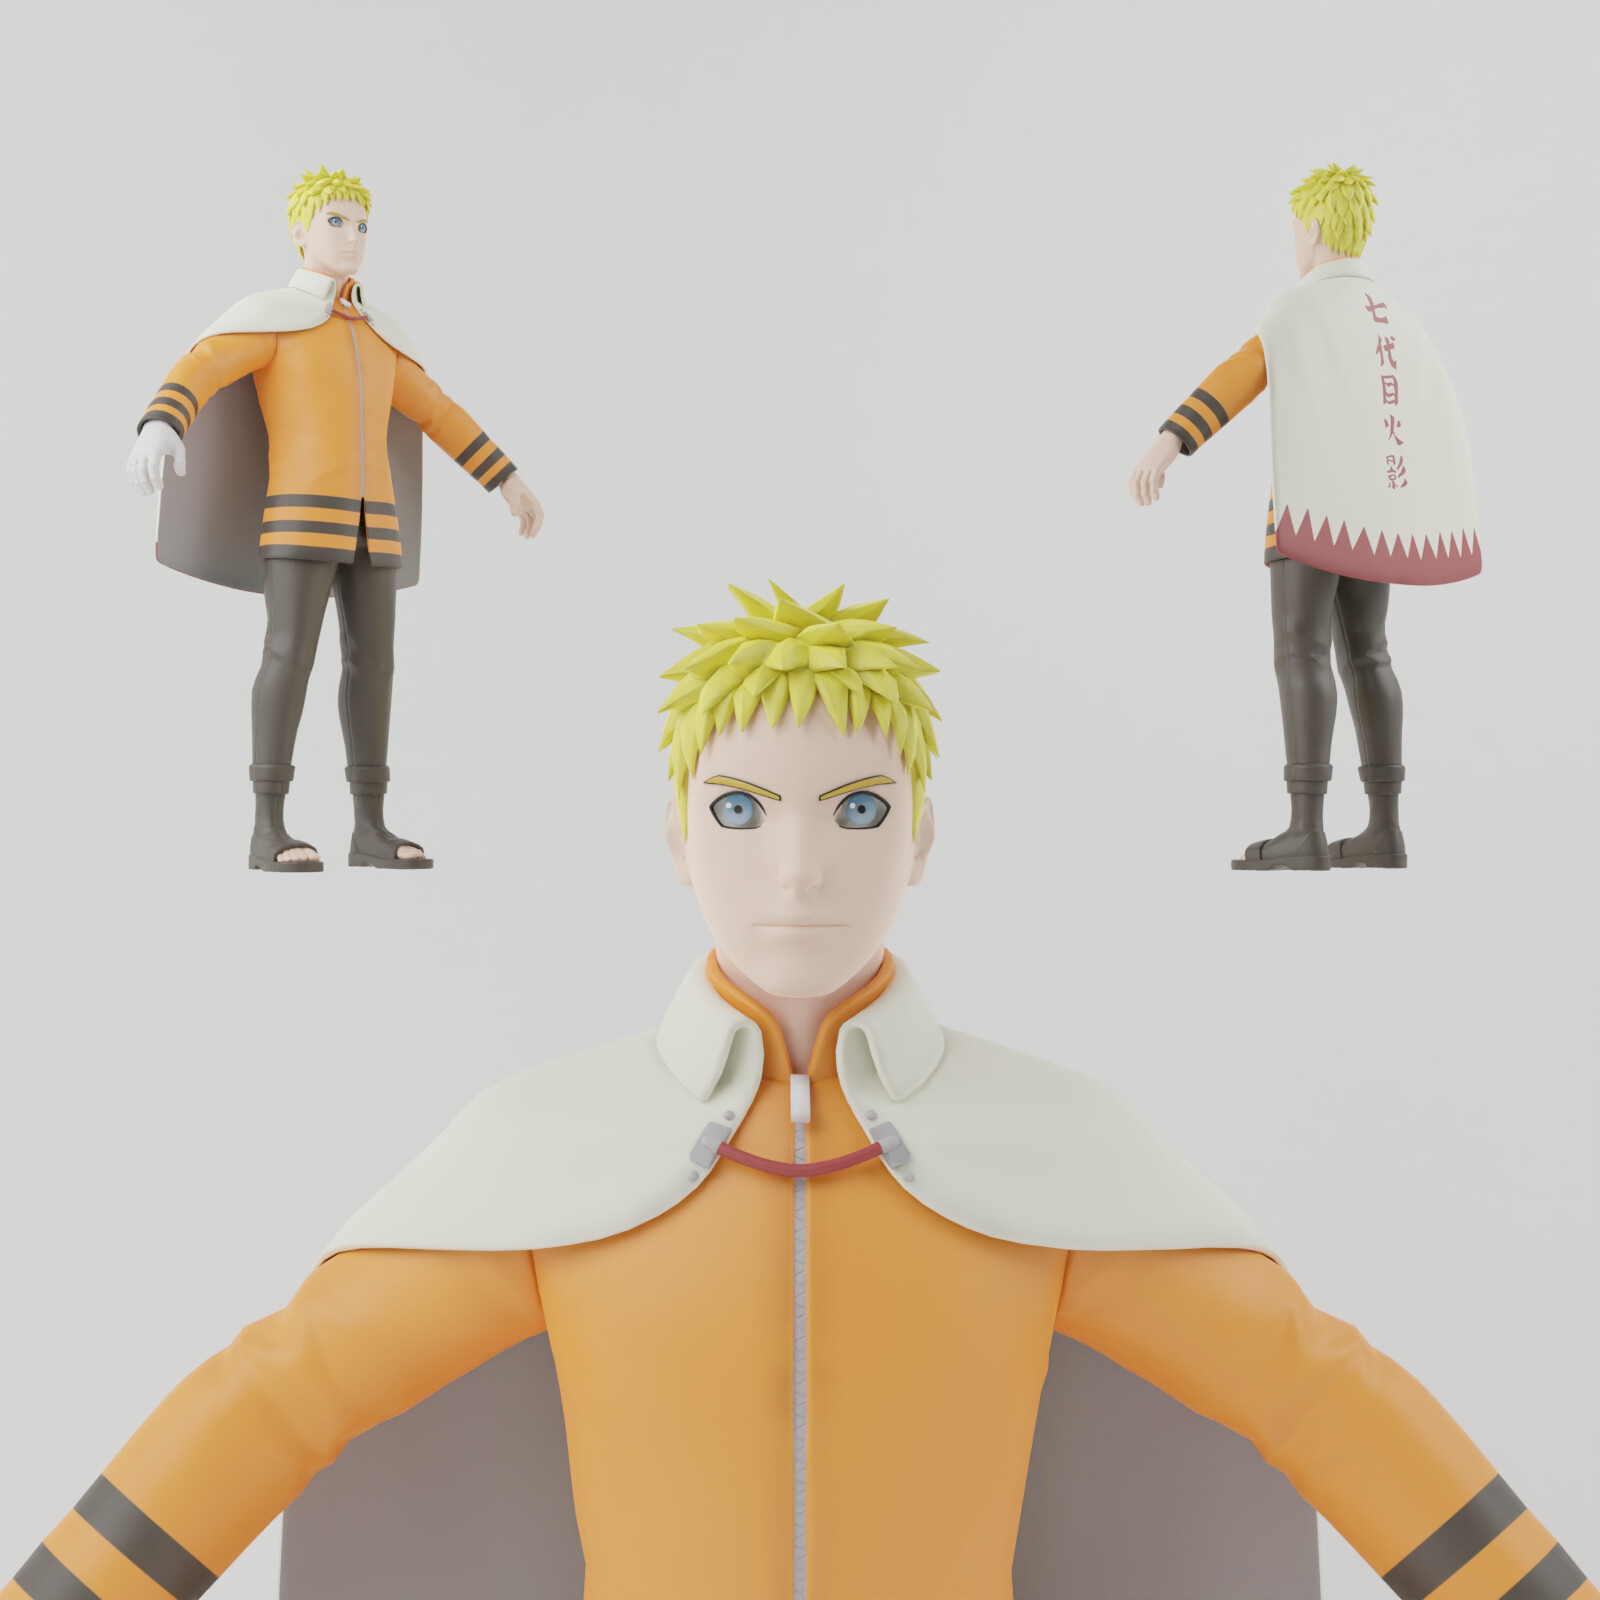 hokage naruto character model - Google Search  Naruto uzumaki, Naruto,  Naruto uzumaki hokage